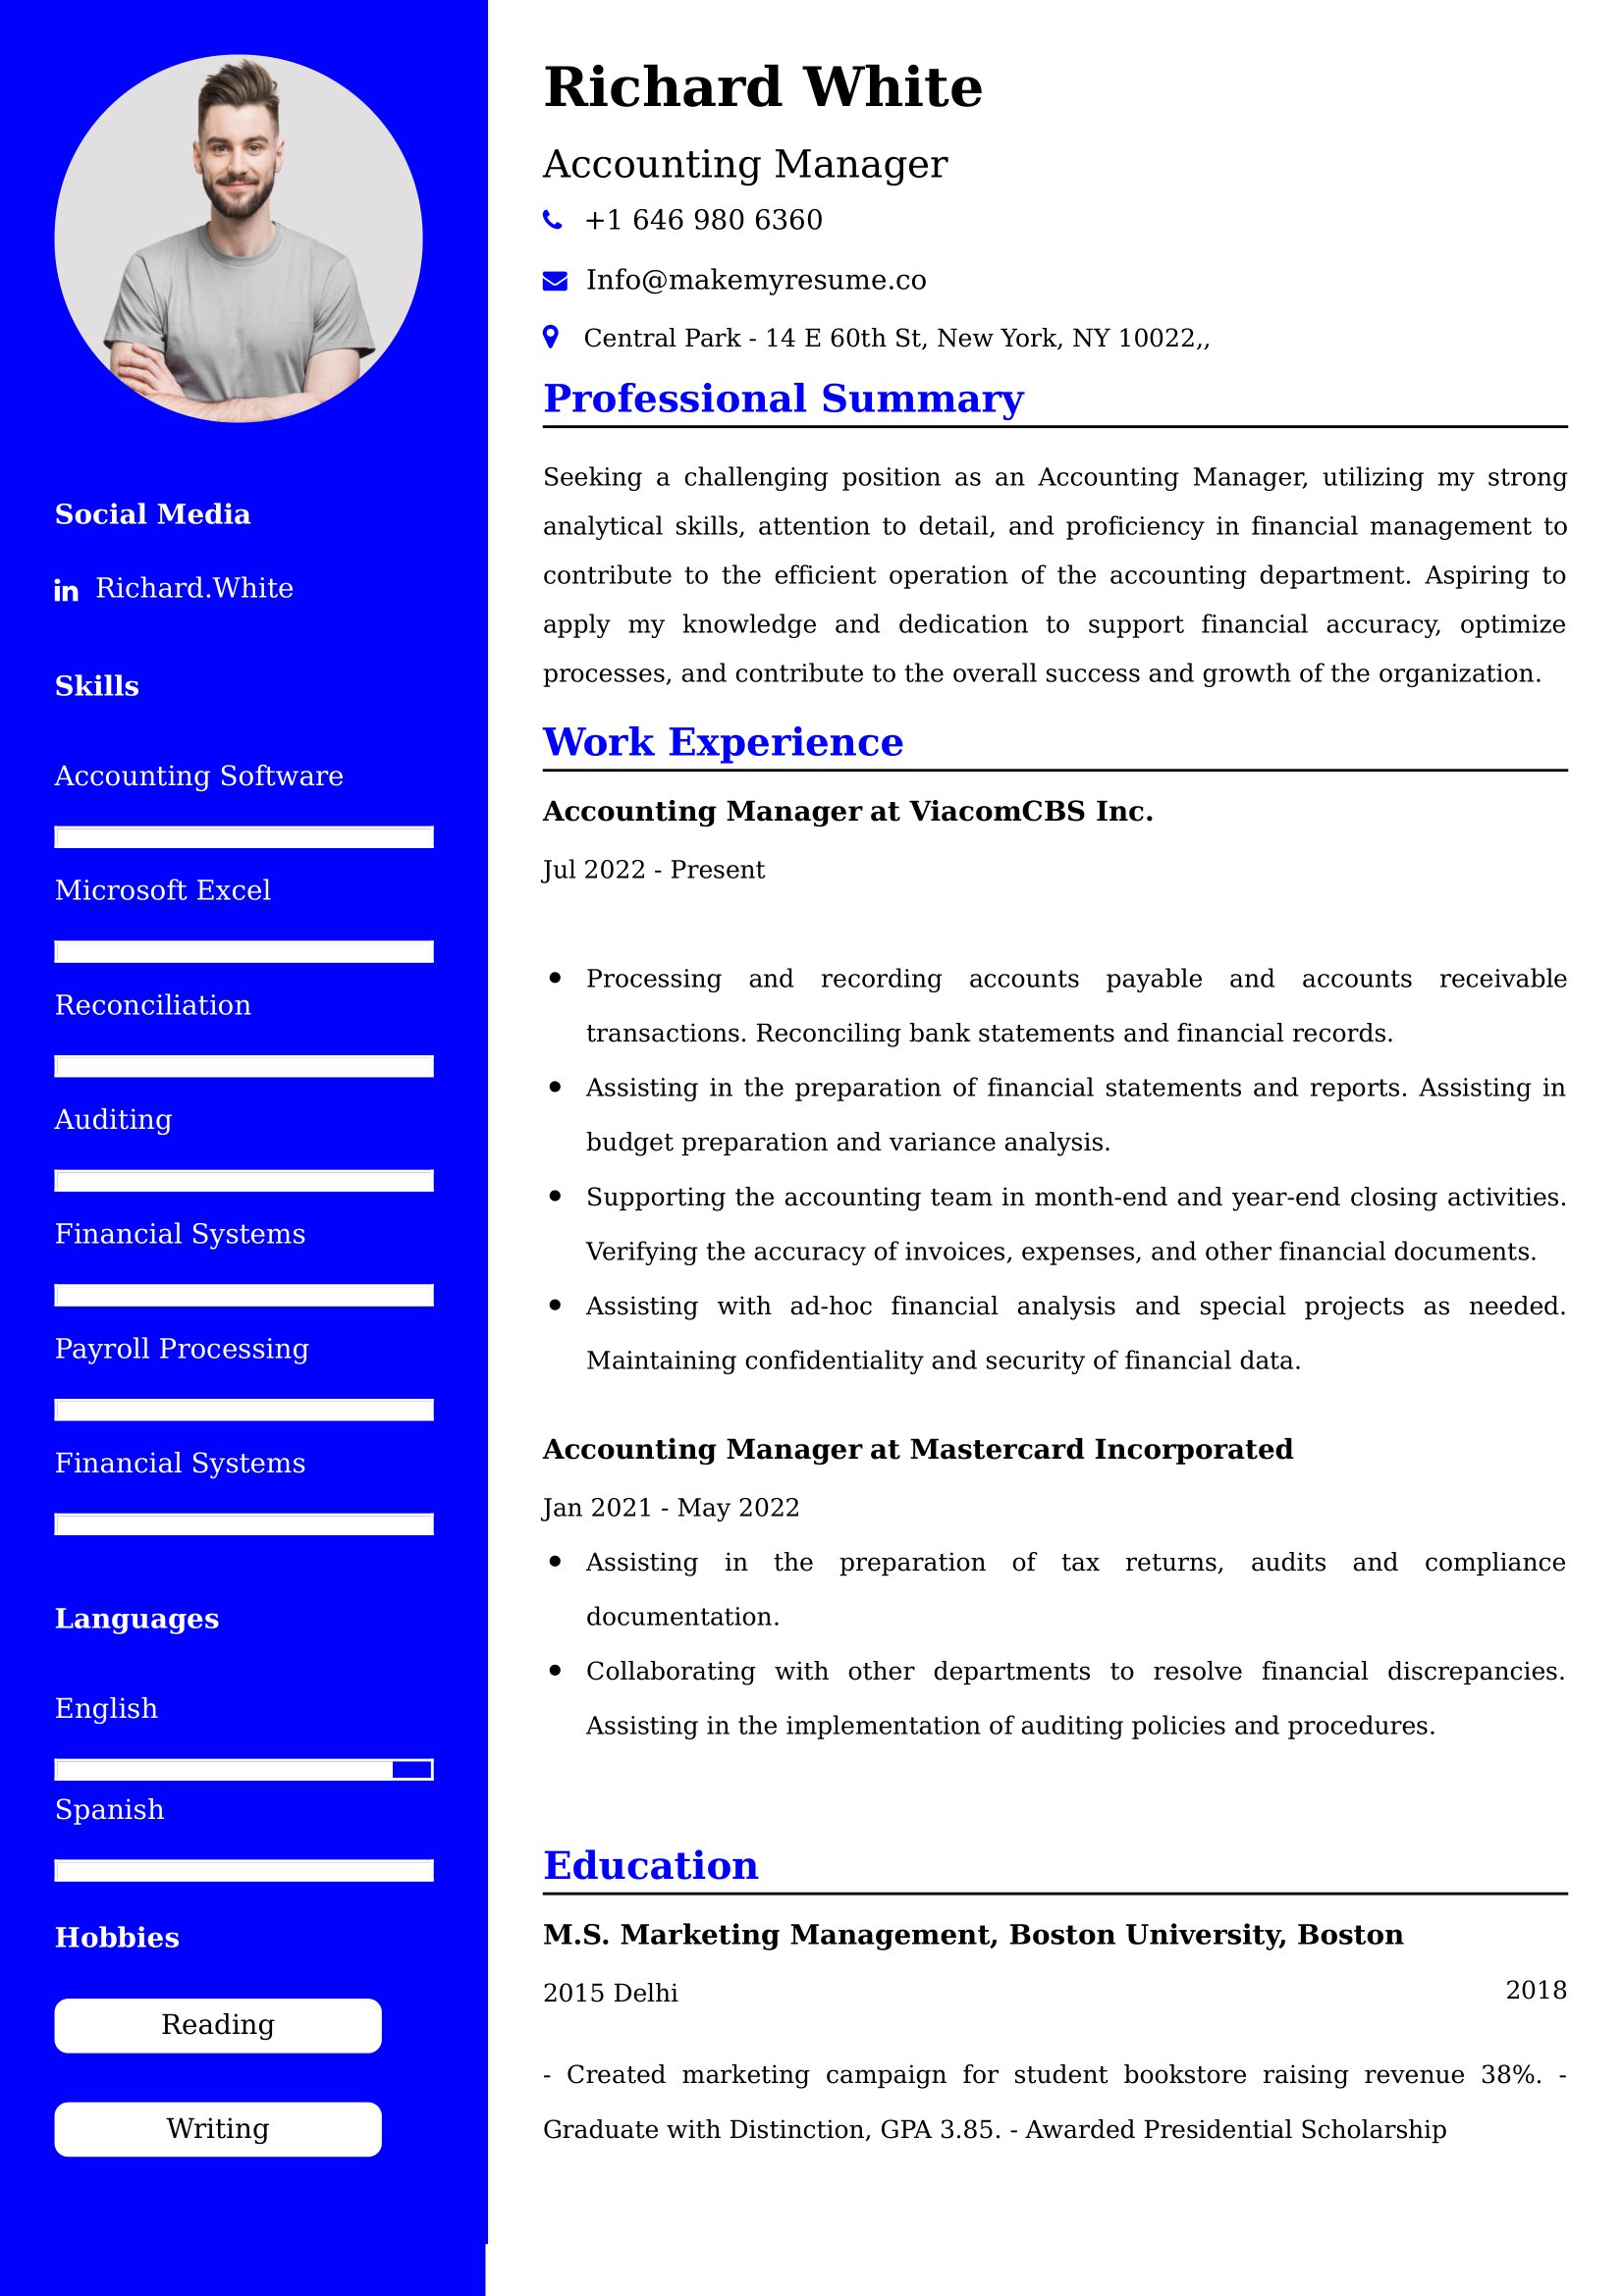 Accounting Manager CV Examples Malaysia